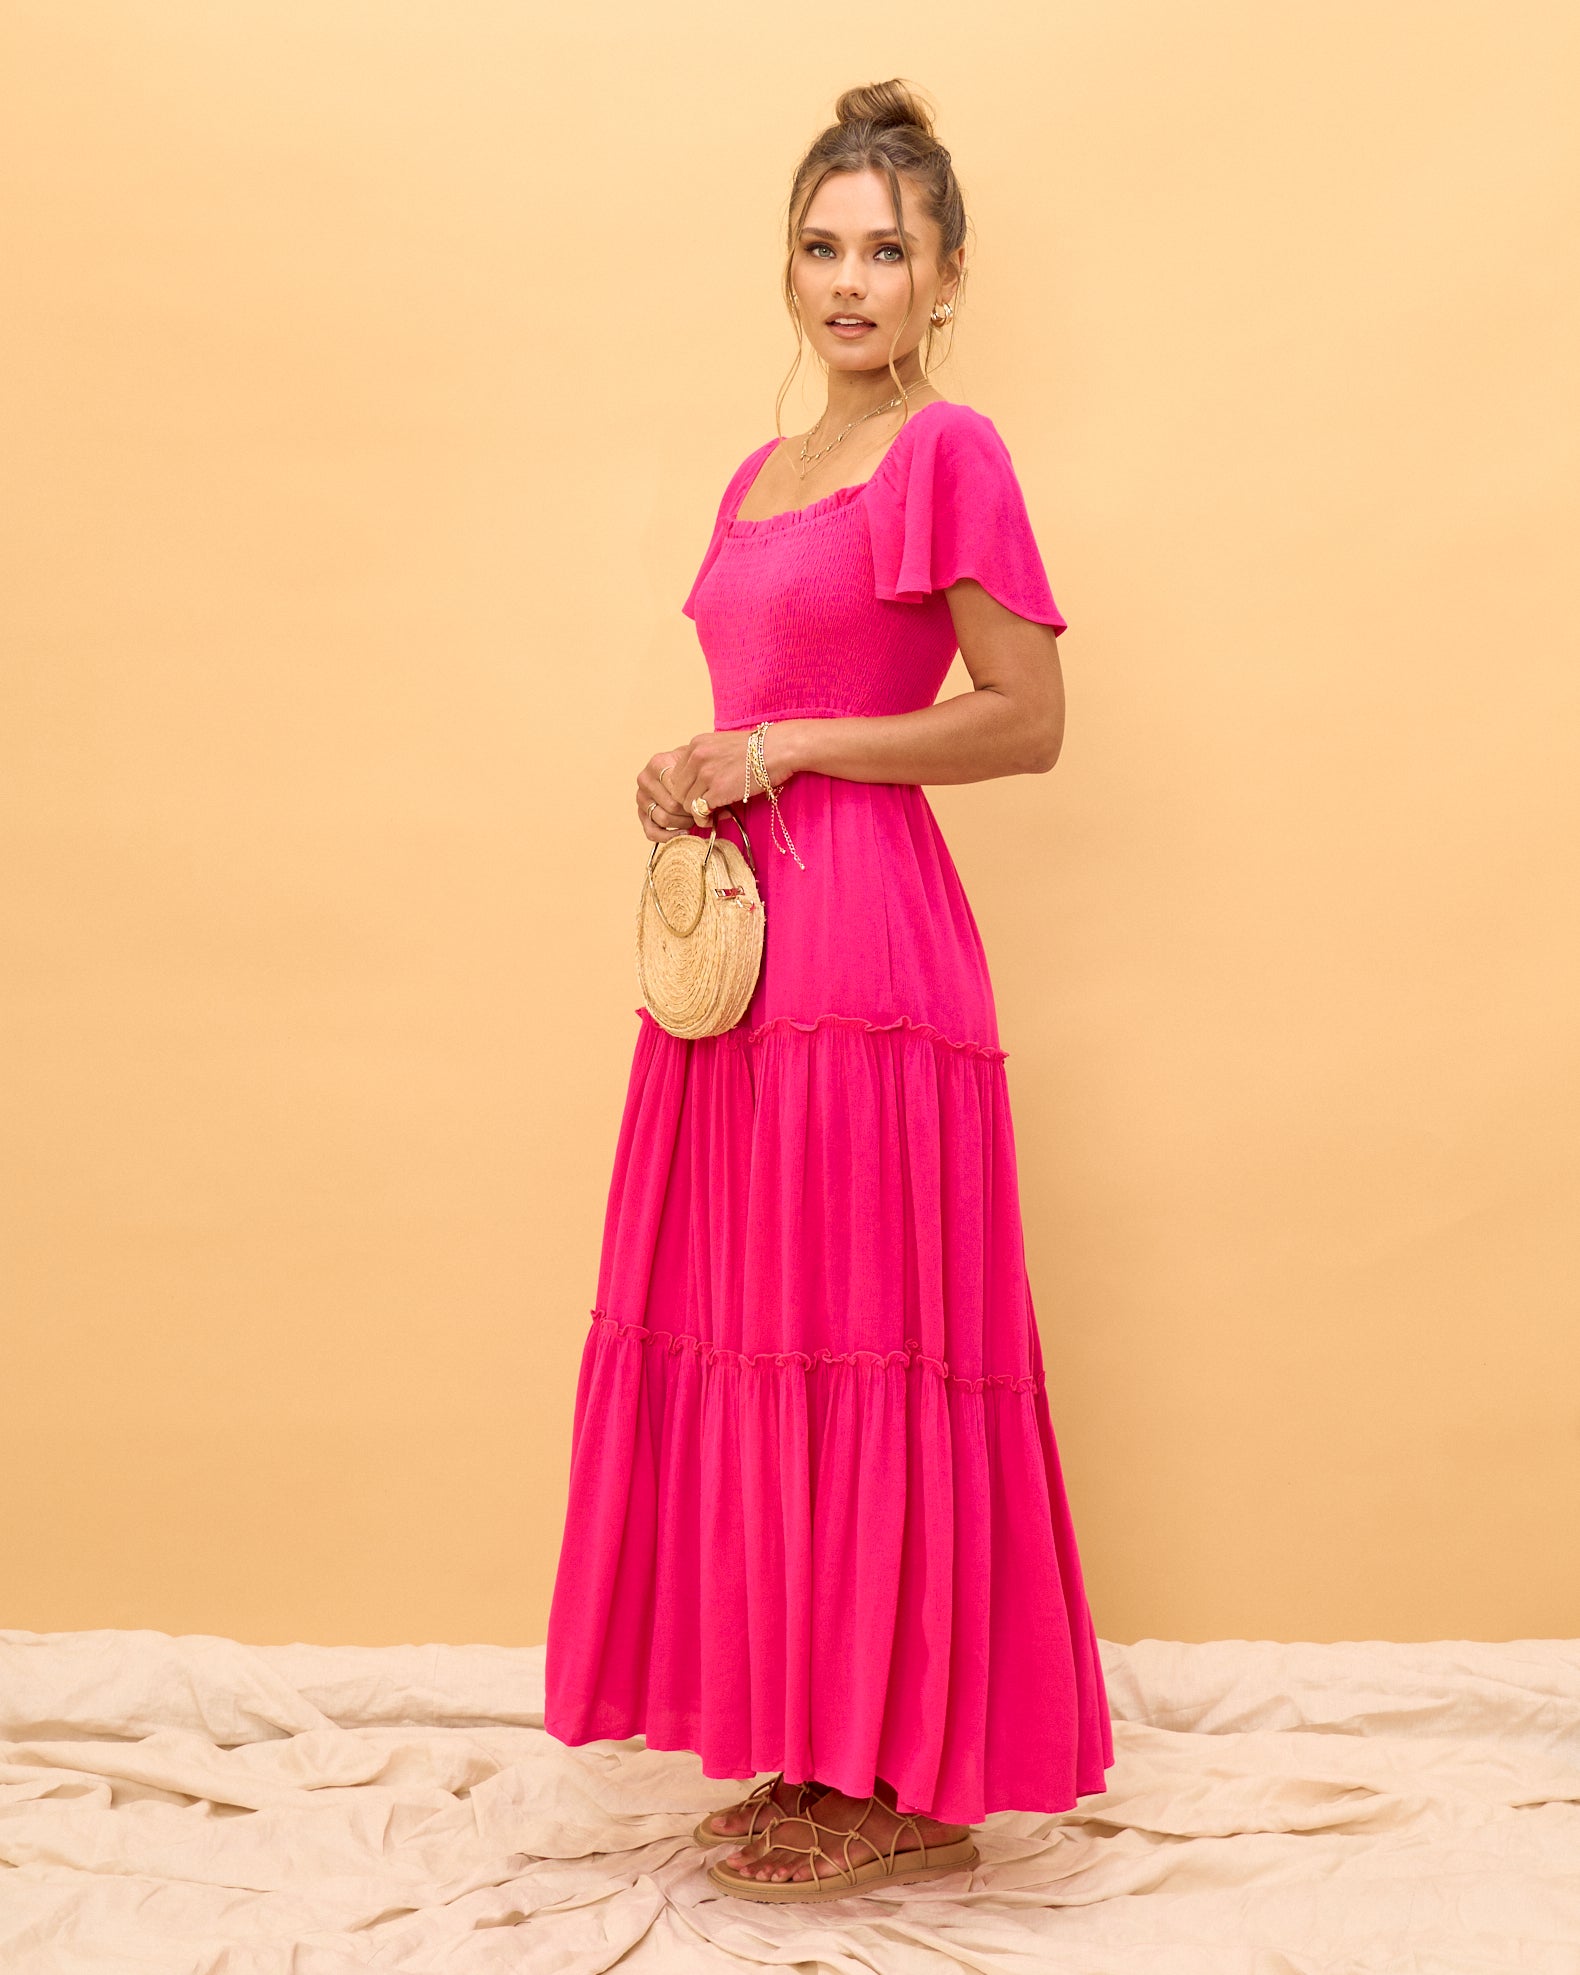 Deia Hot Pink Tiered Maxi Dress